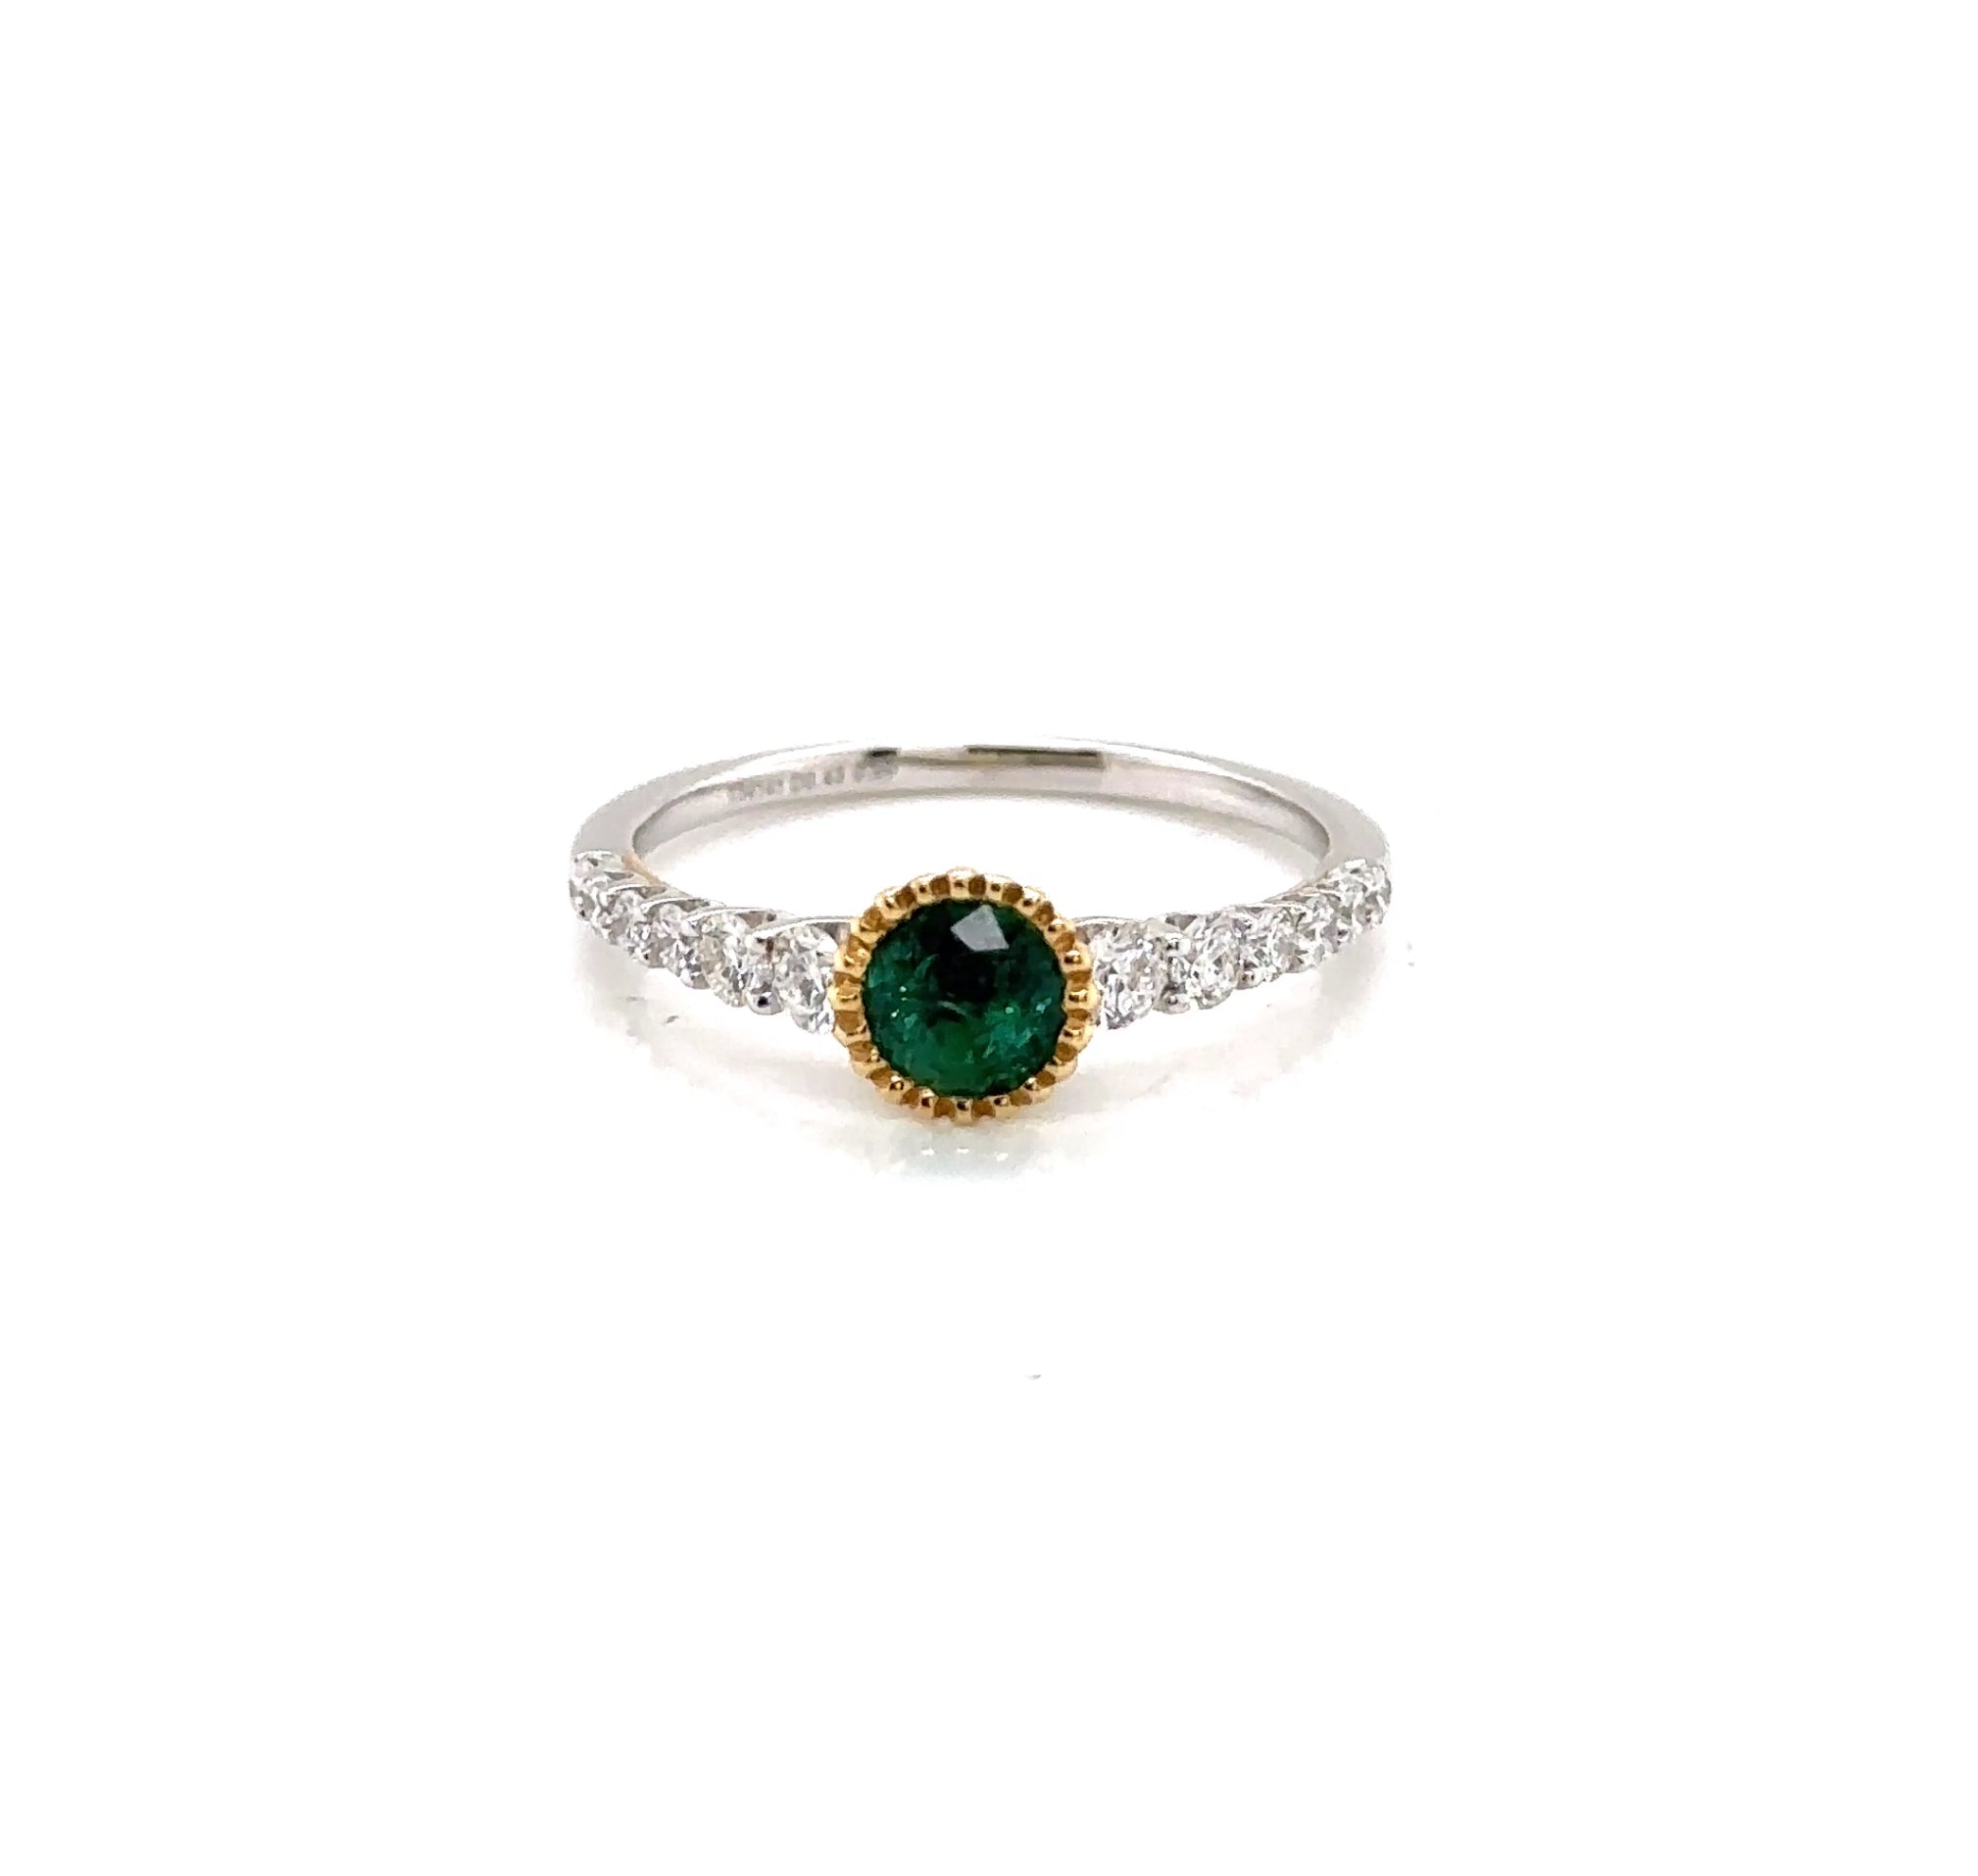 18K Yellow Gold Emerald and Diamond Fashion Ring